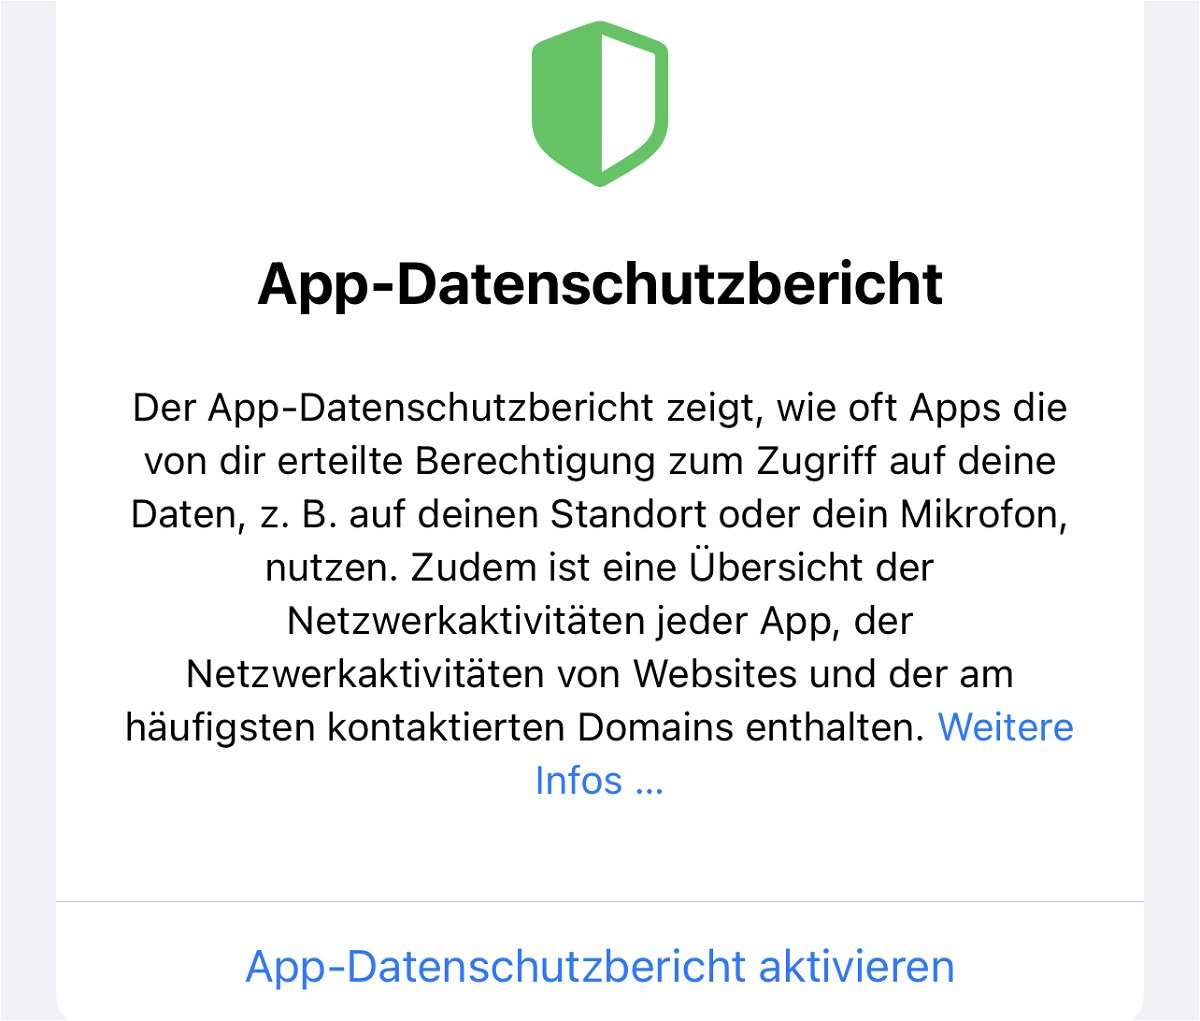 App-Datenschutzbericht in iOS aktivieren